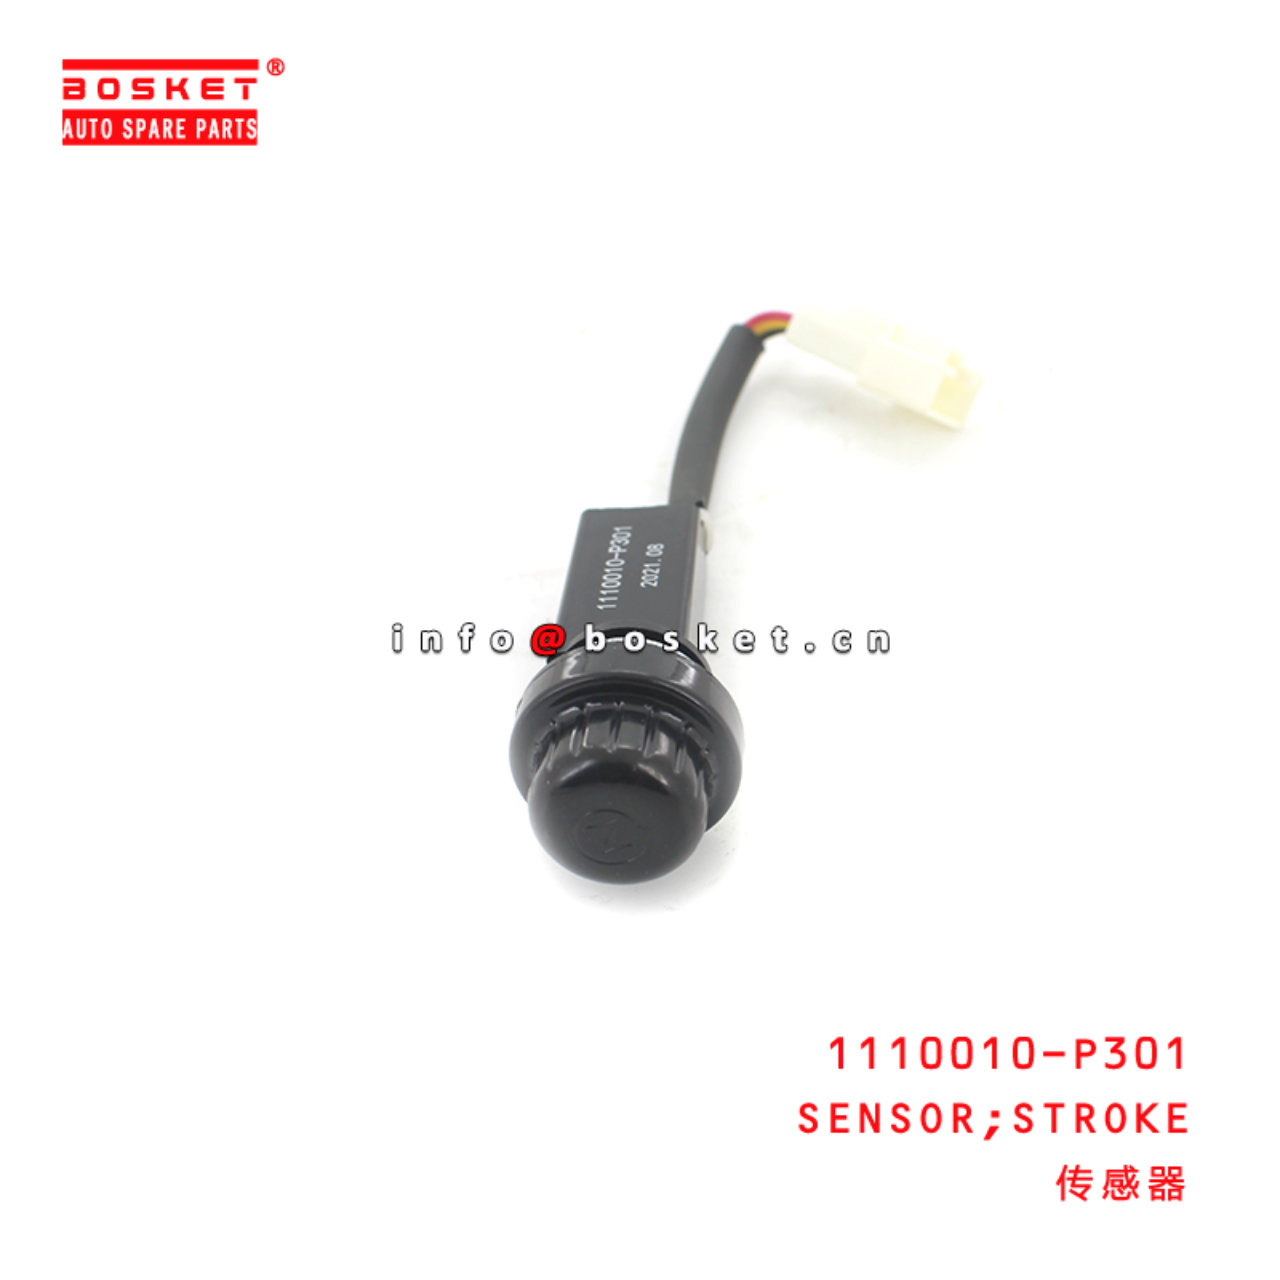 1110010-P301 Stroke Sensor suitable for ISUZU 1110010-P301